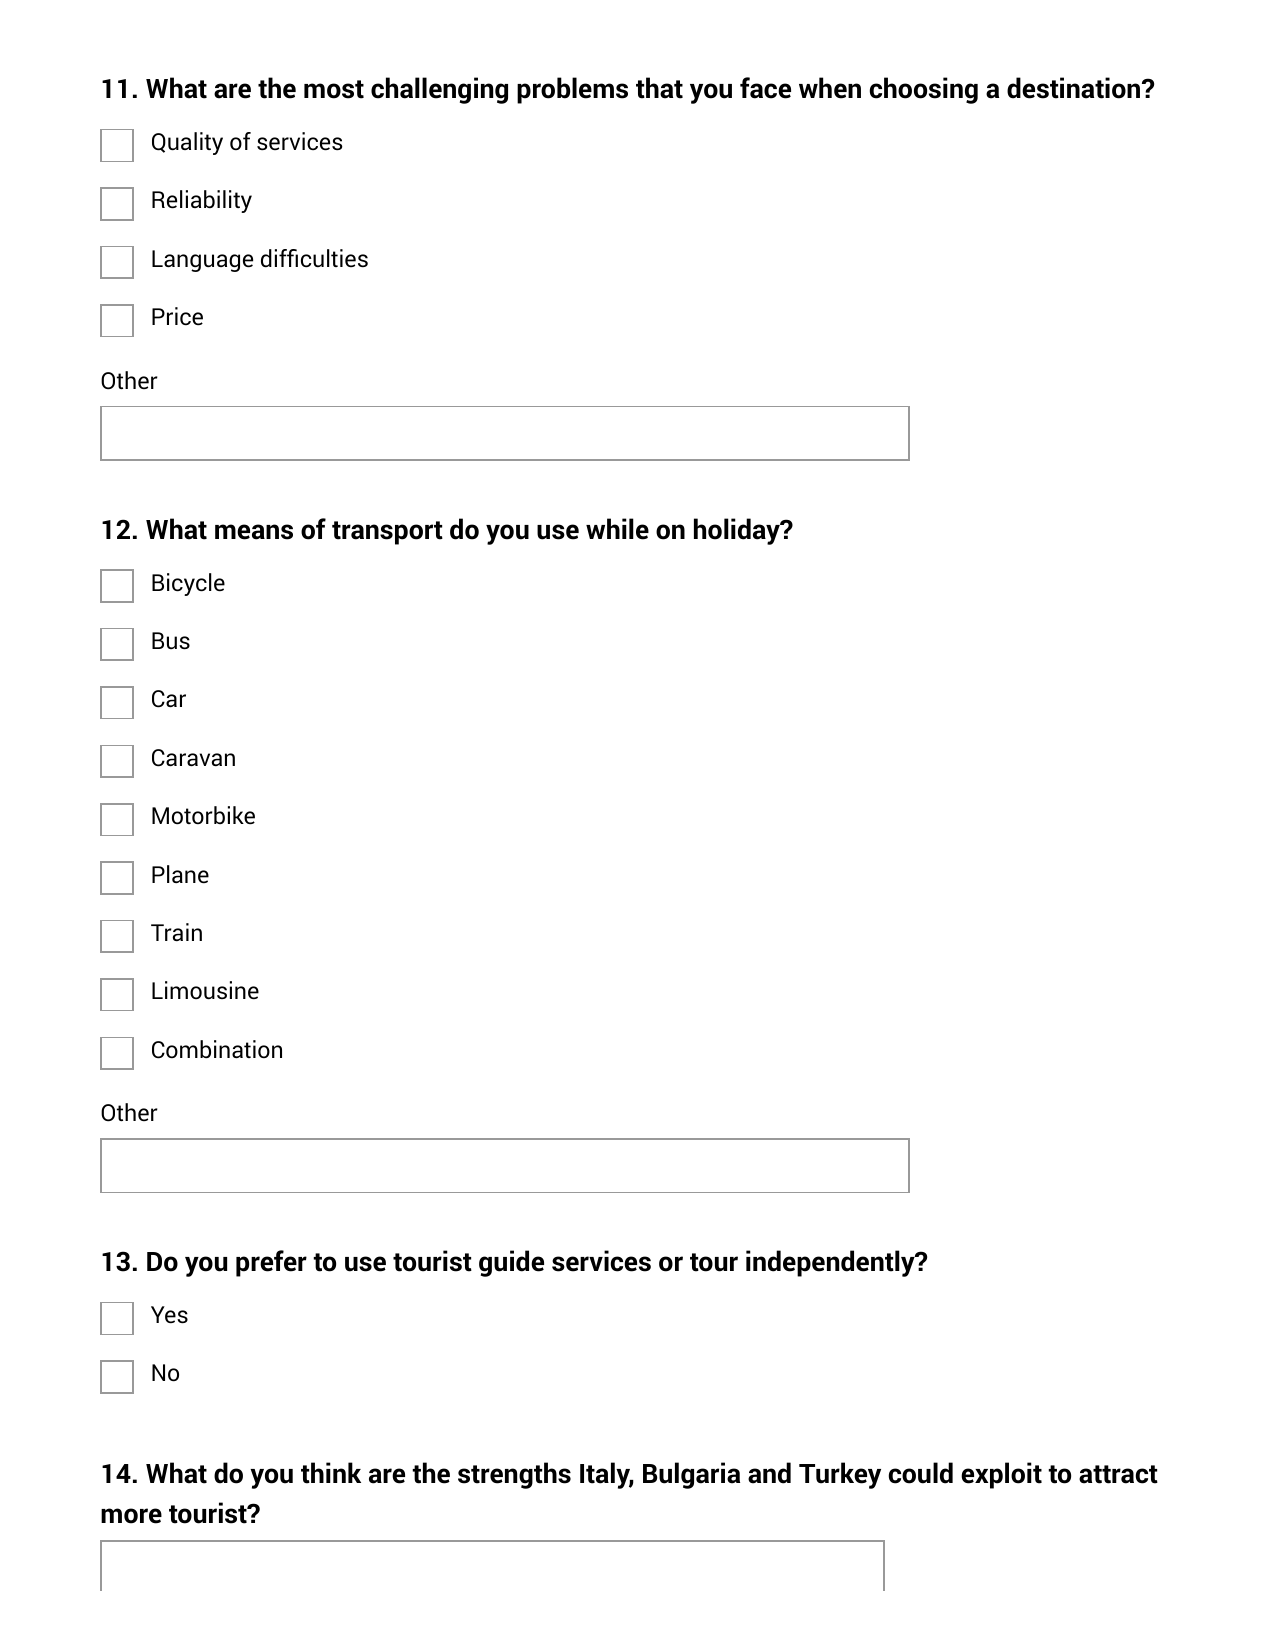 questionnaire on tourism marketing